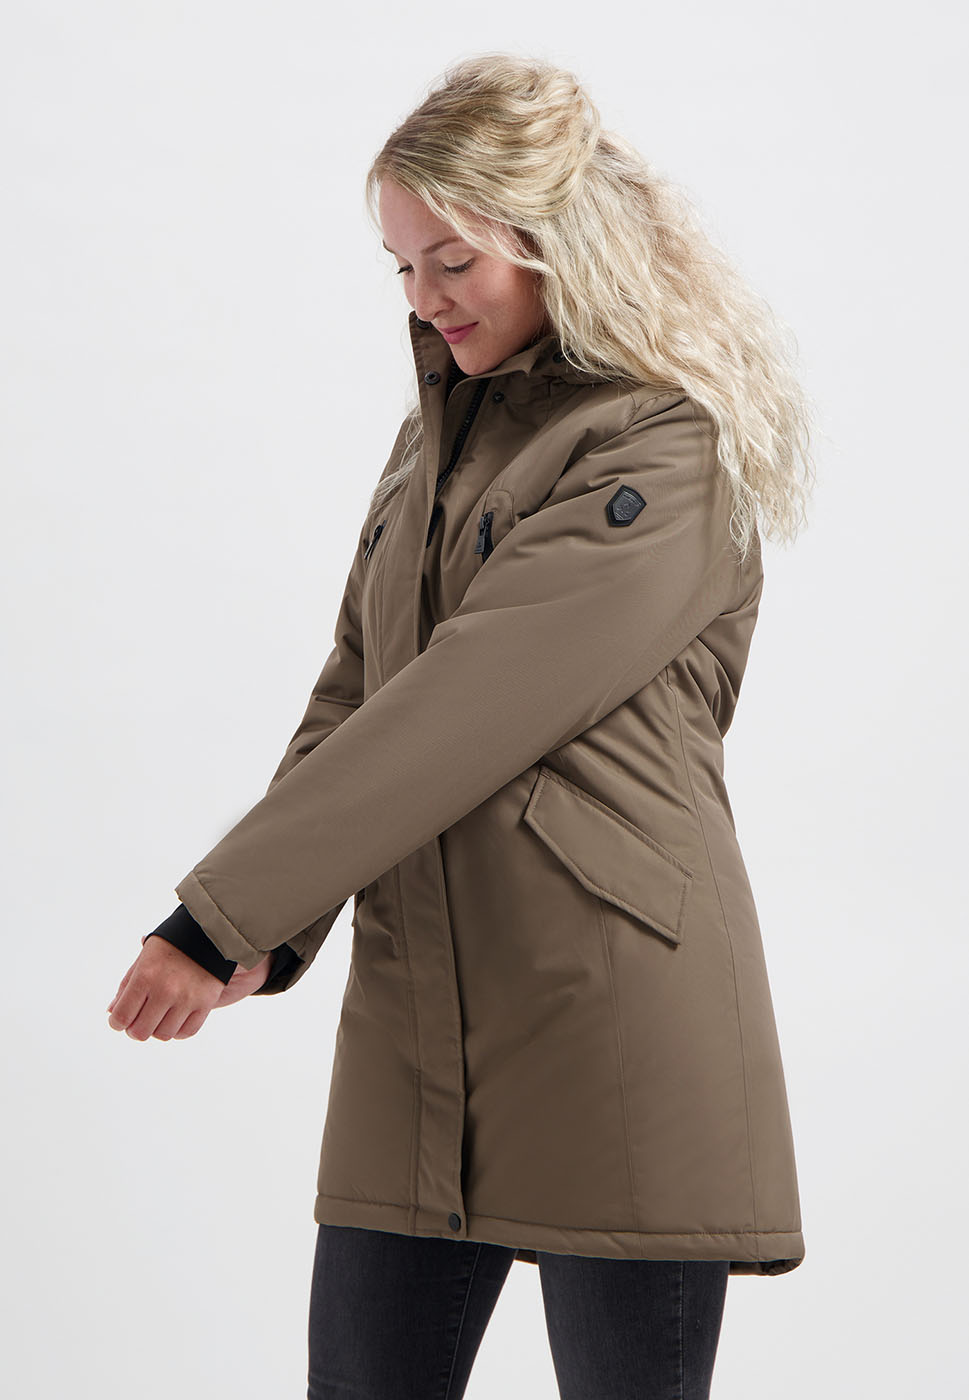 Kjelvik Scandinavian Clothing - Women Jackets Berber Brown